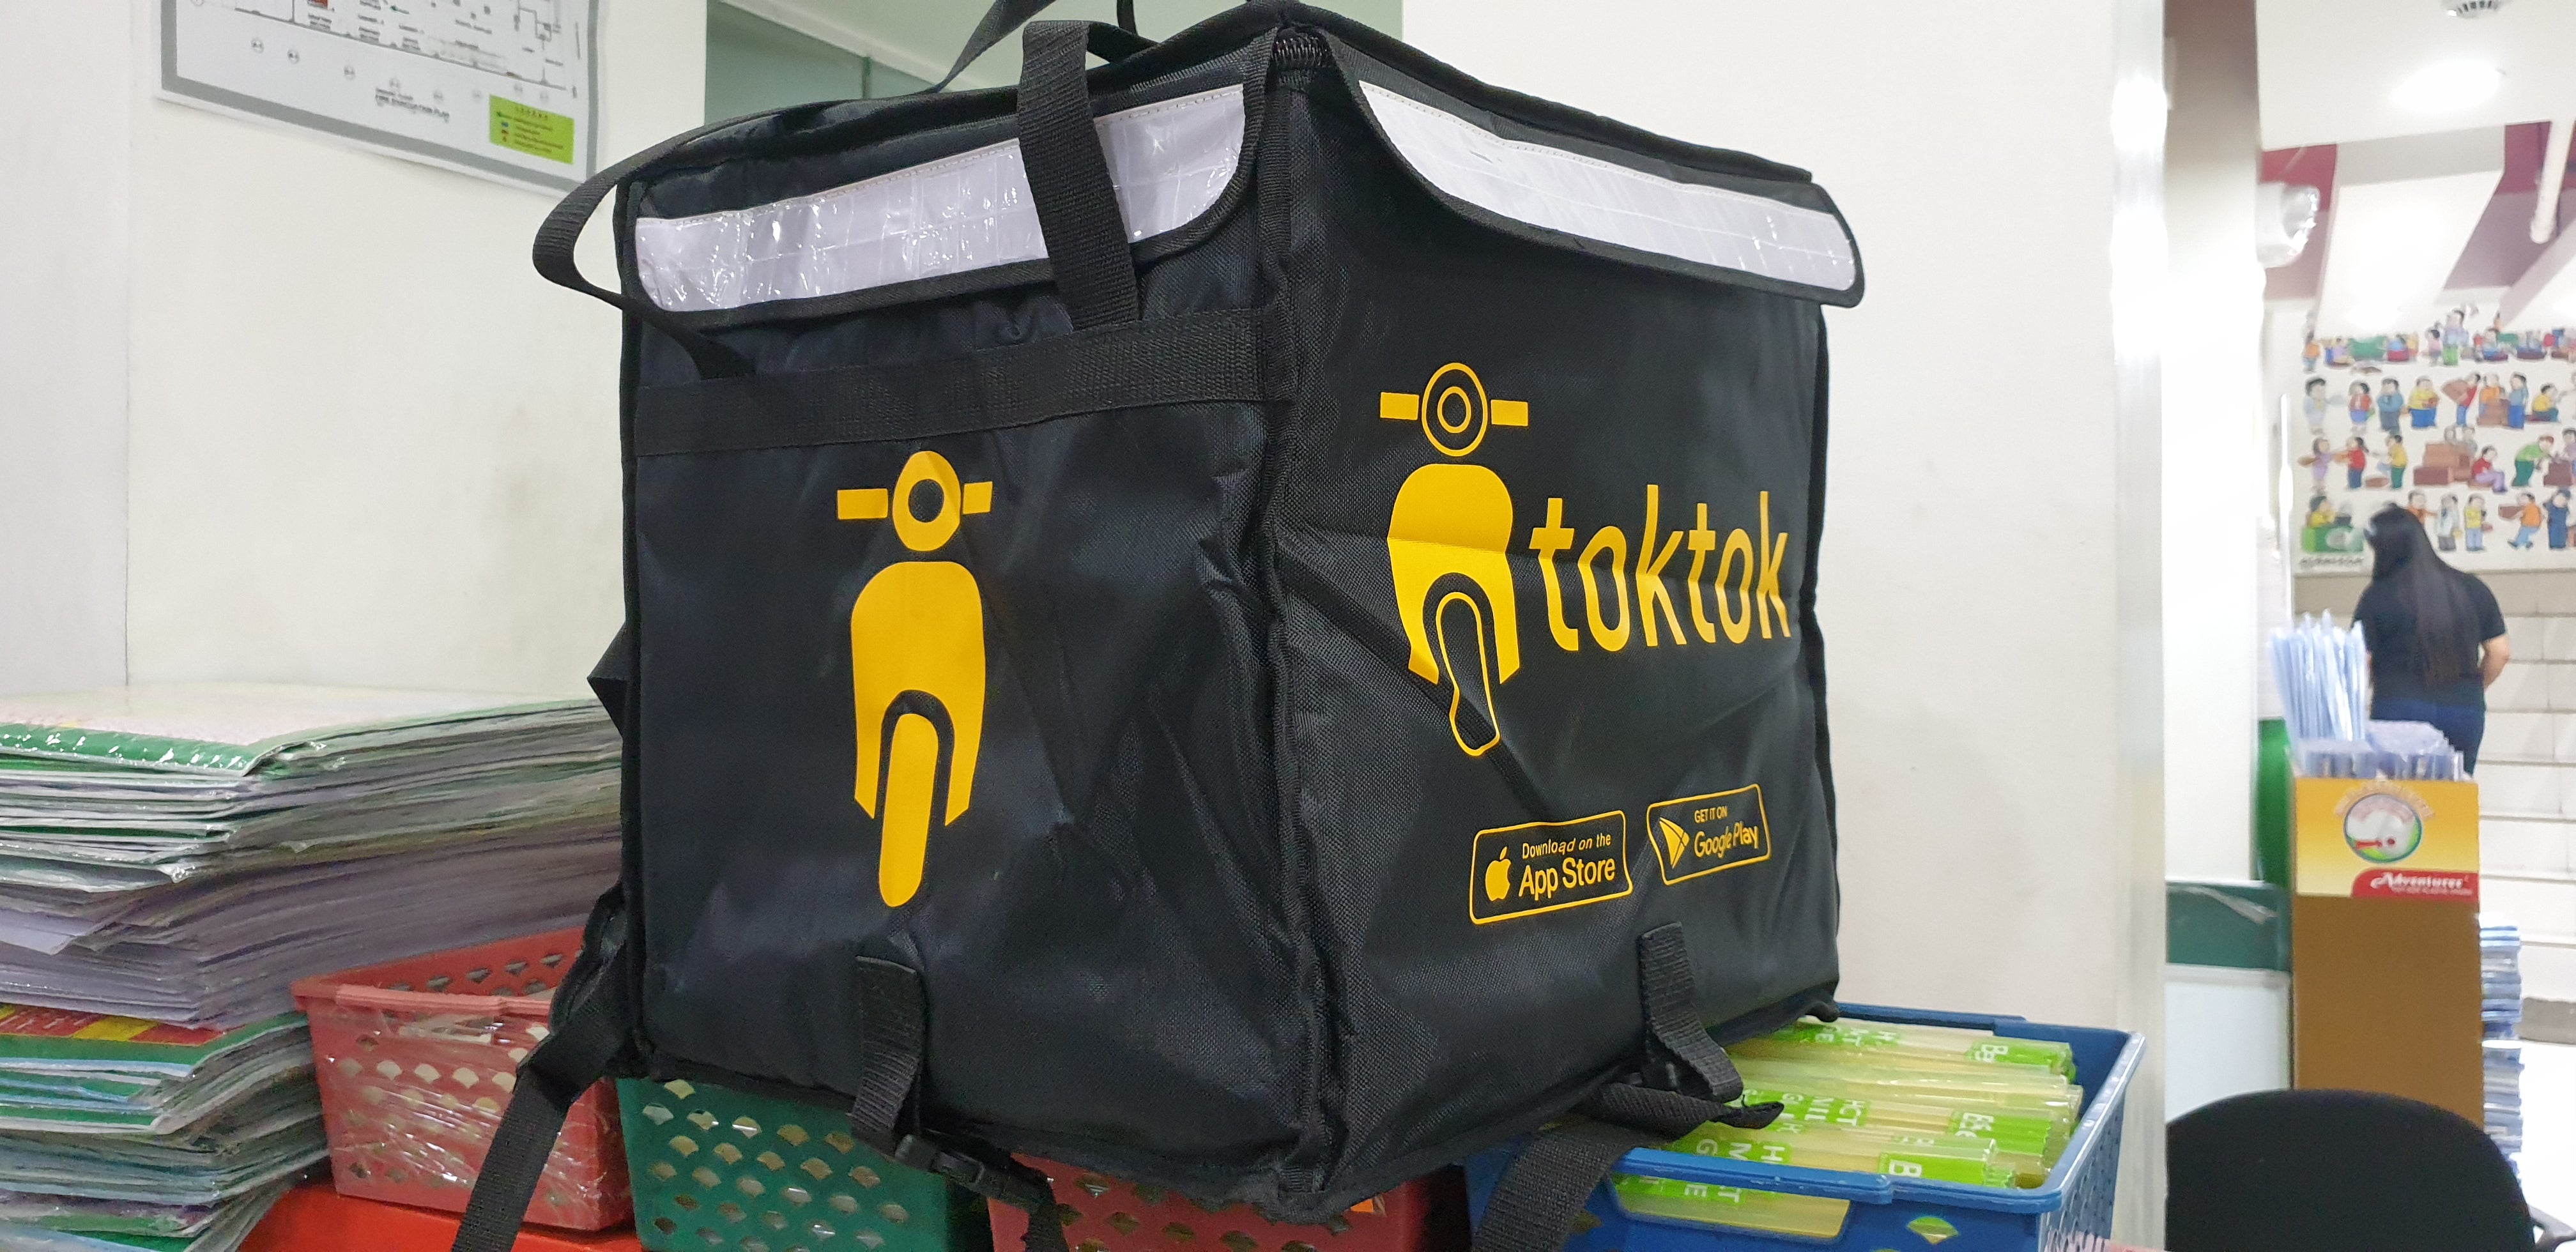 Toktok Insulated Bag